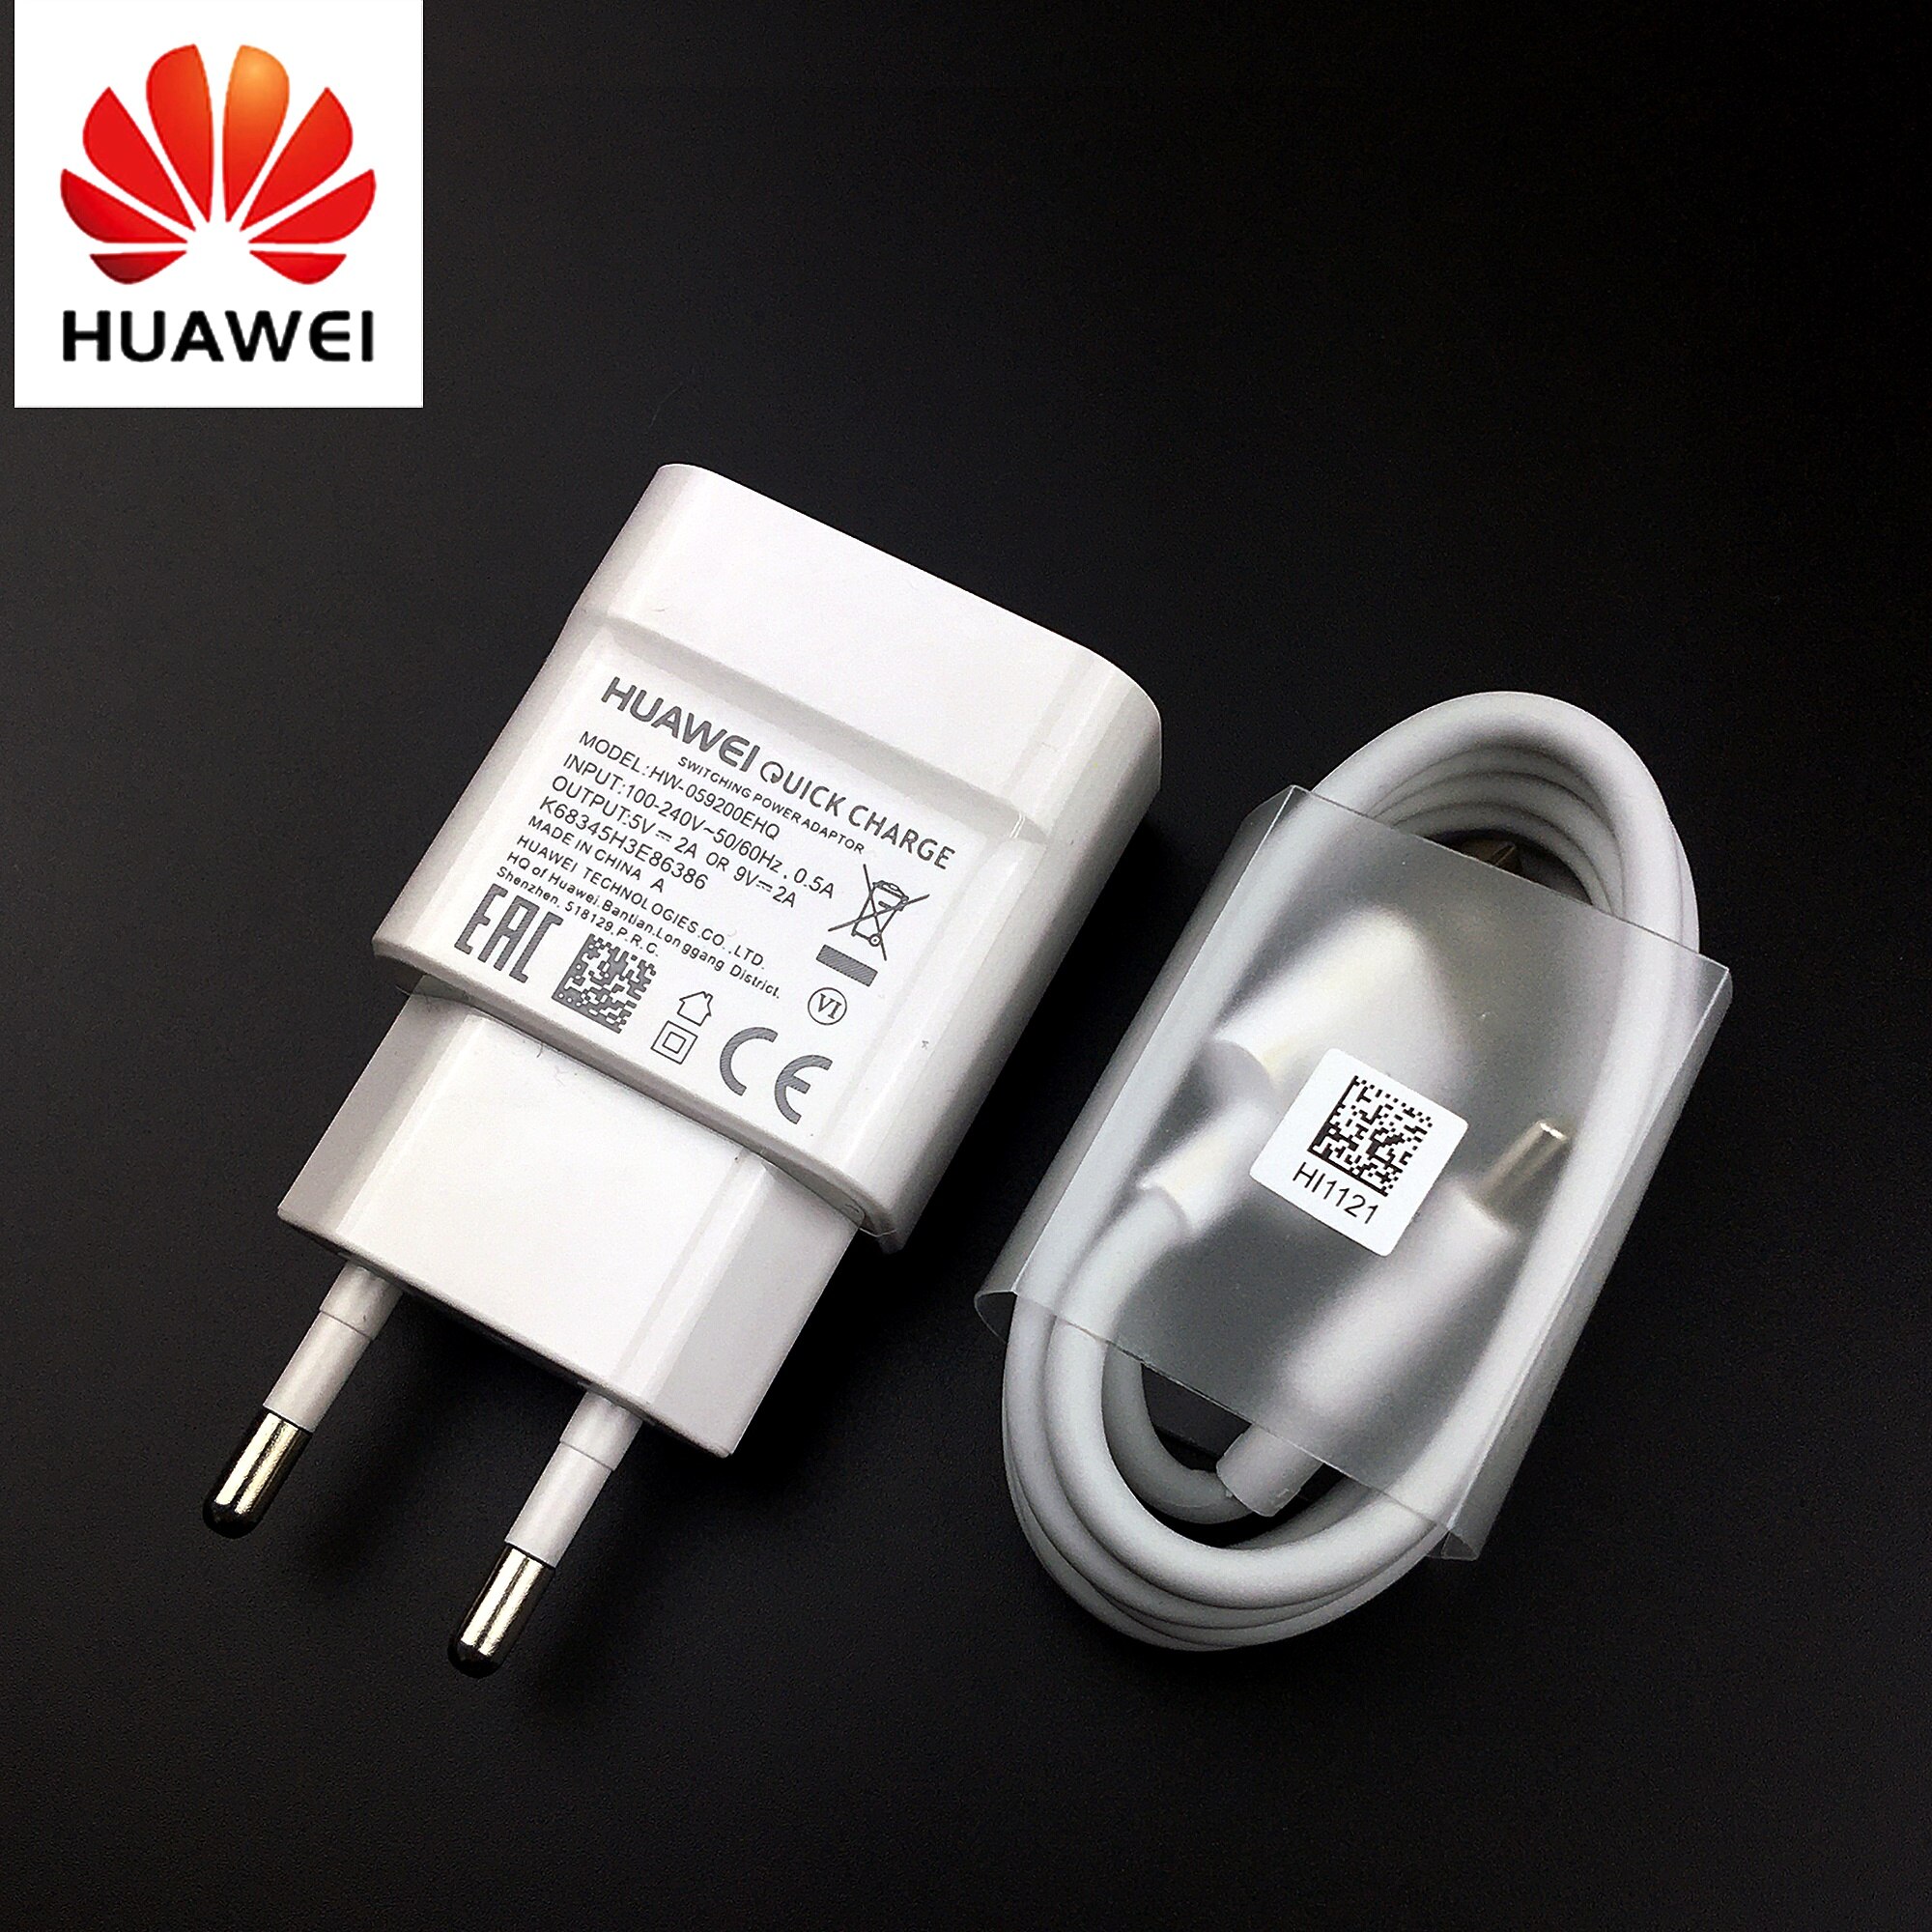 Huawei Snelle Lader Originele Qc 2.0 Eu Quick Charge Power Adapter Voor Honor 9 P9 P20 Lite Mate 20 Lite nova 2 3 Usb Type C Kabel